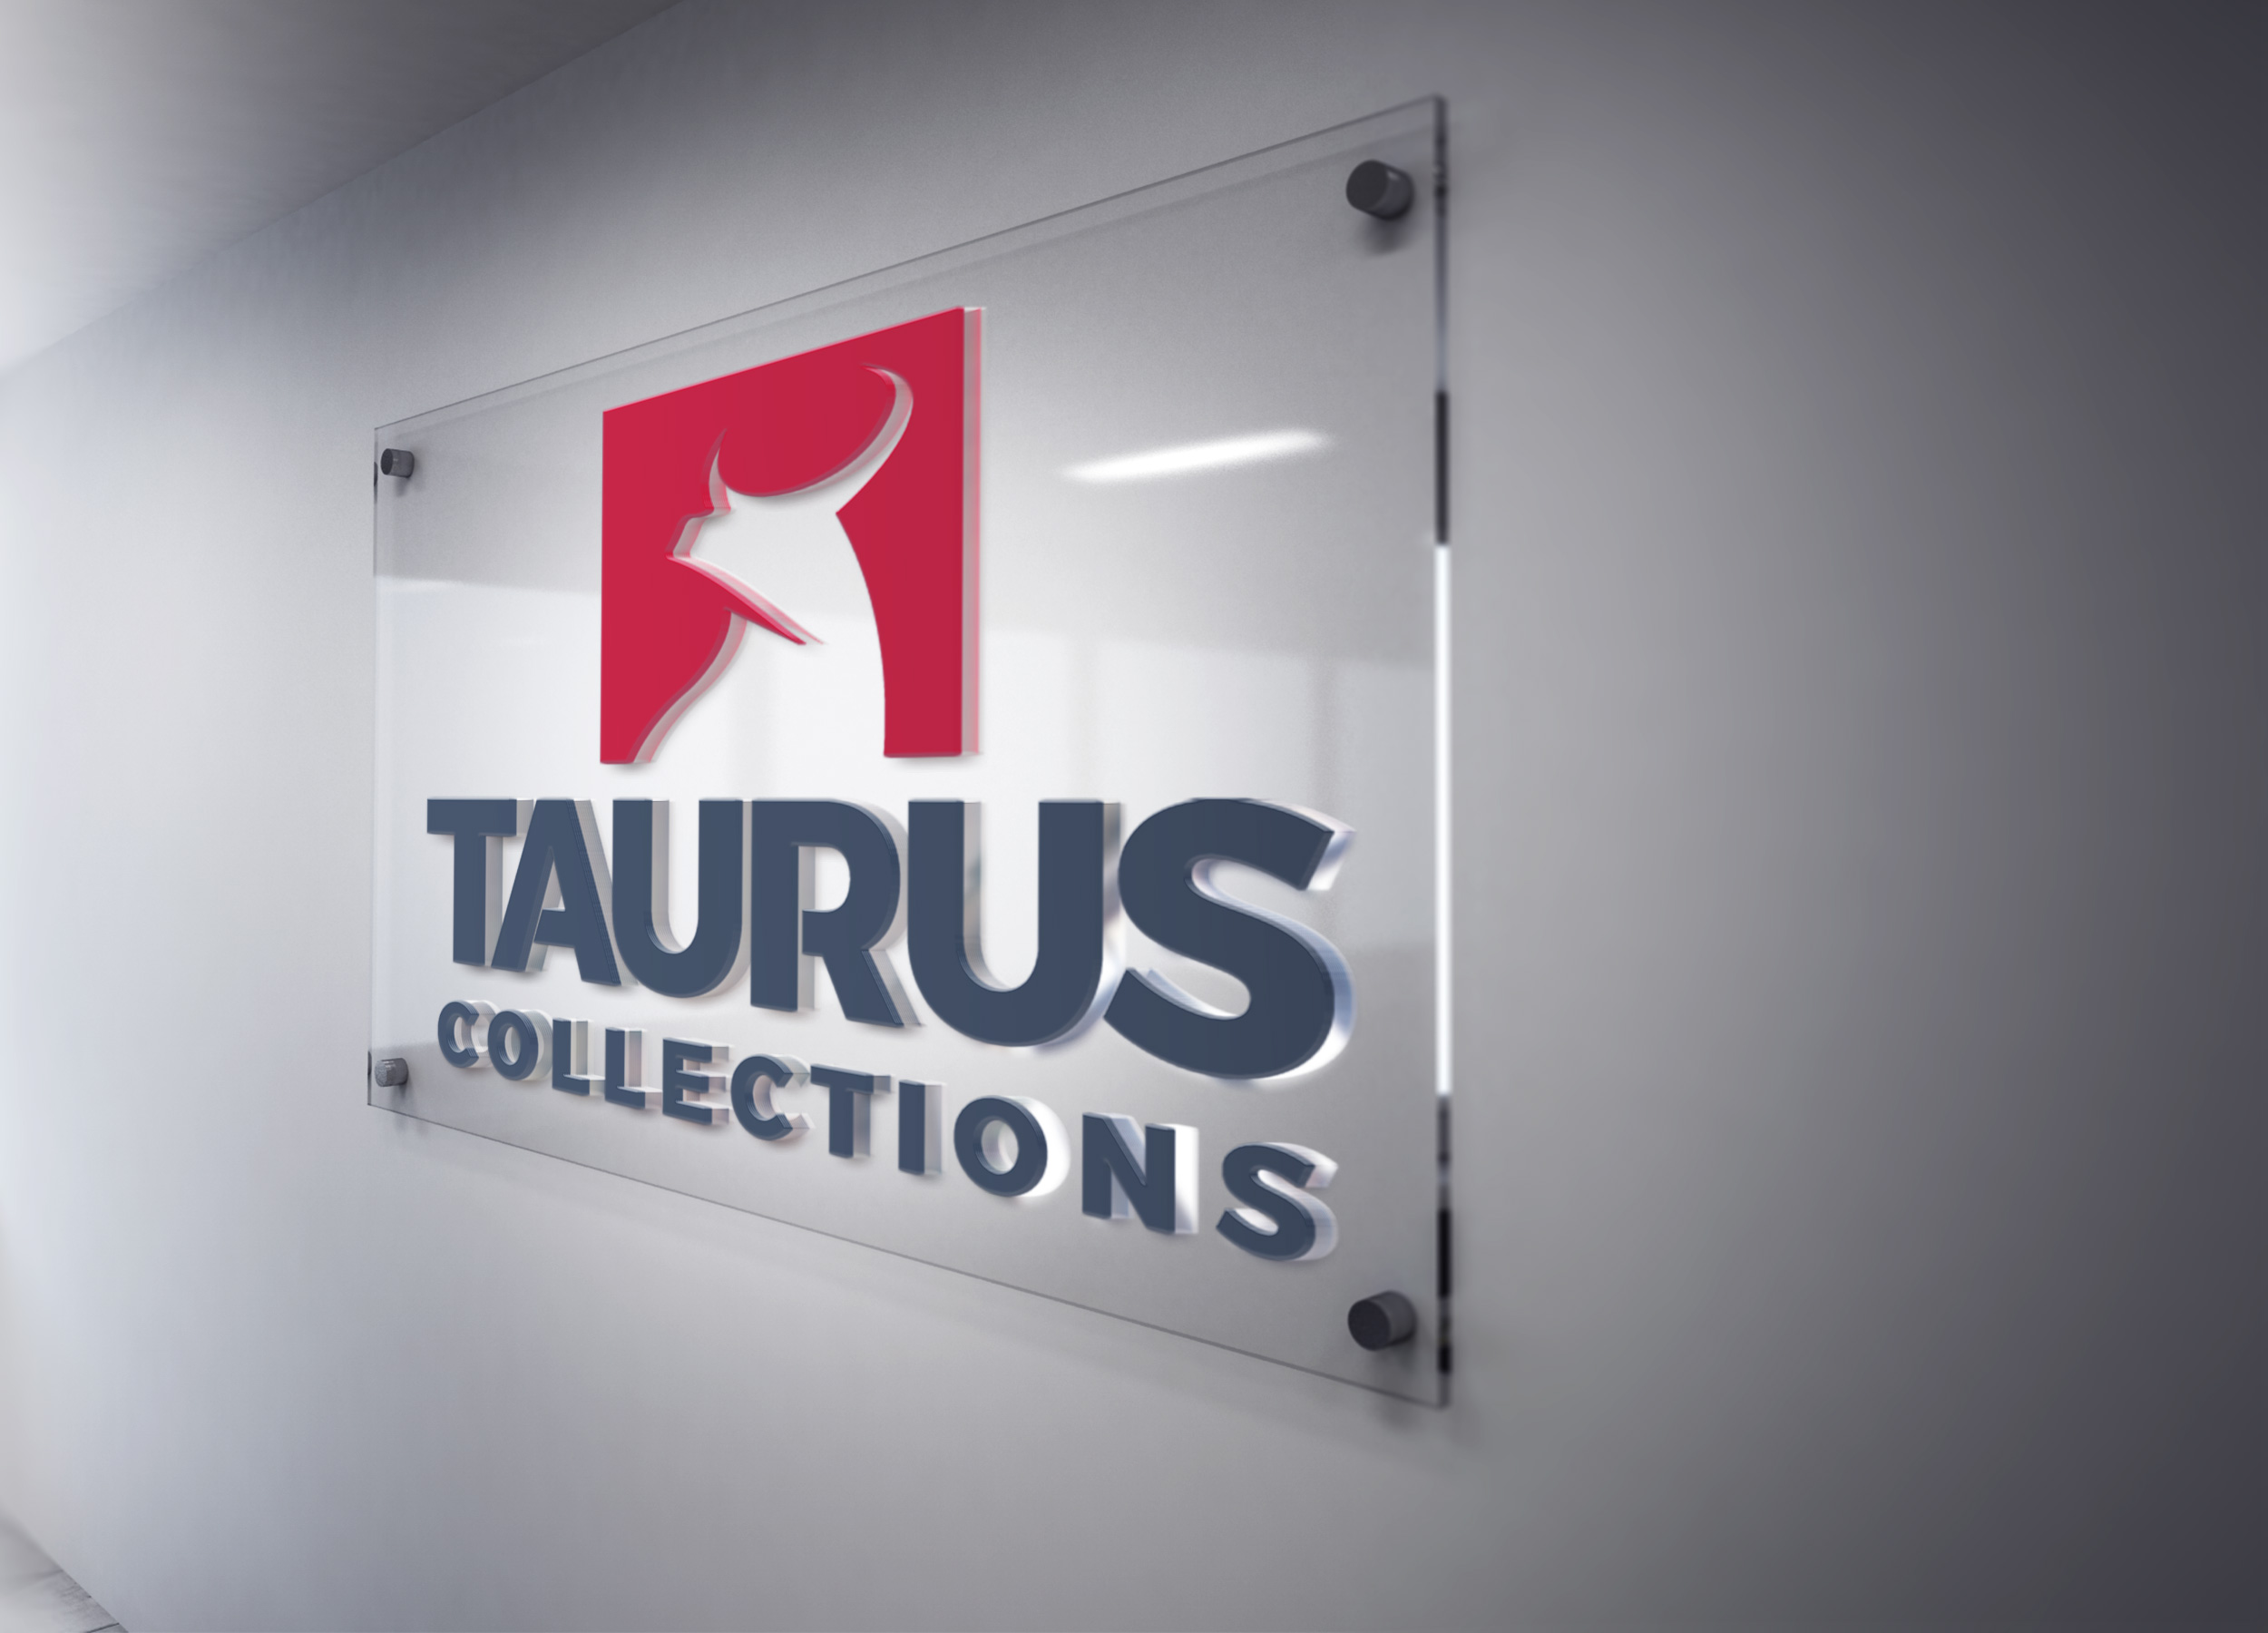 Taurus Collections (UK) Ltd